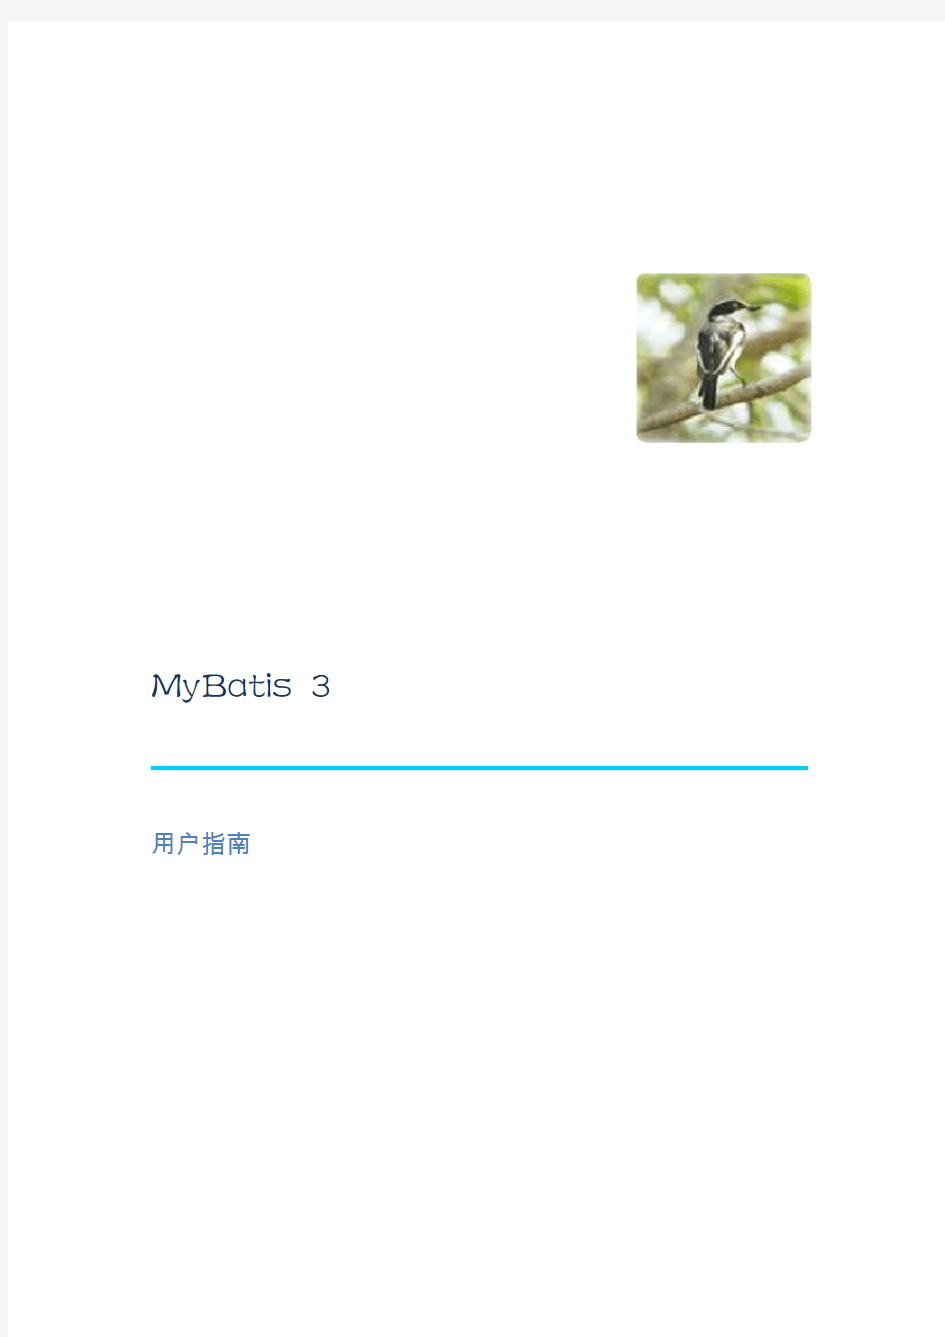 MyBatis3 教程 中文版